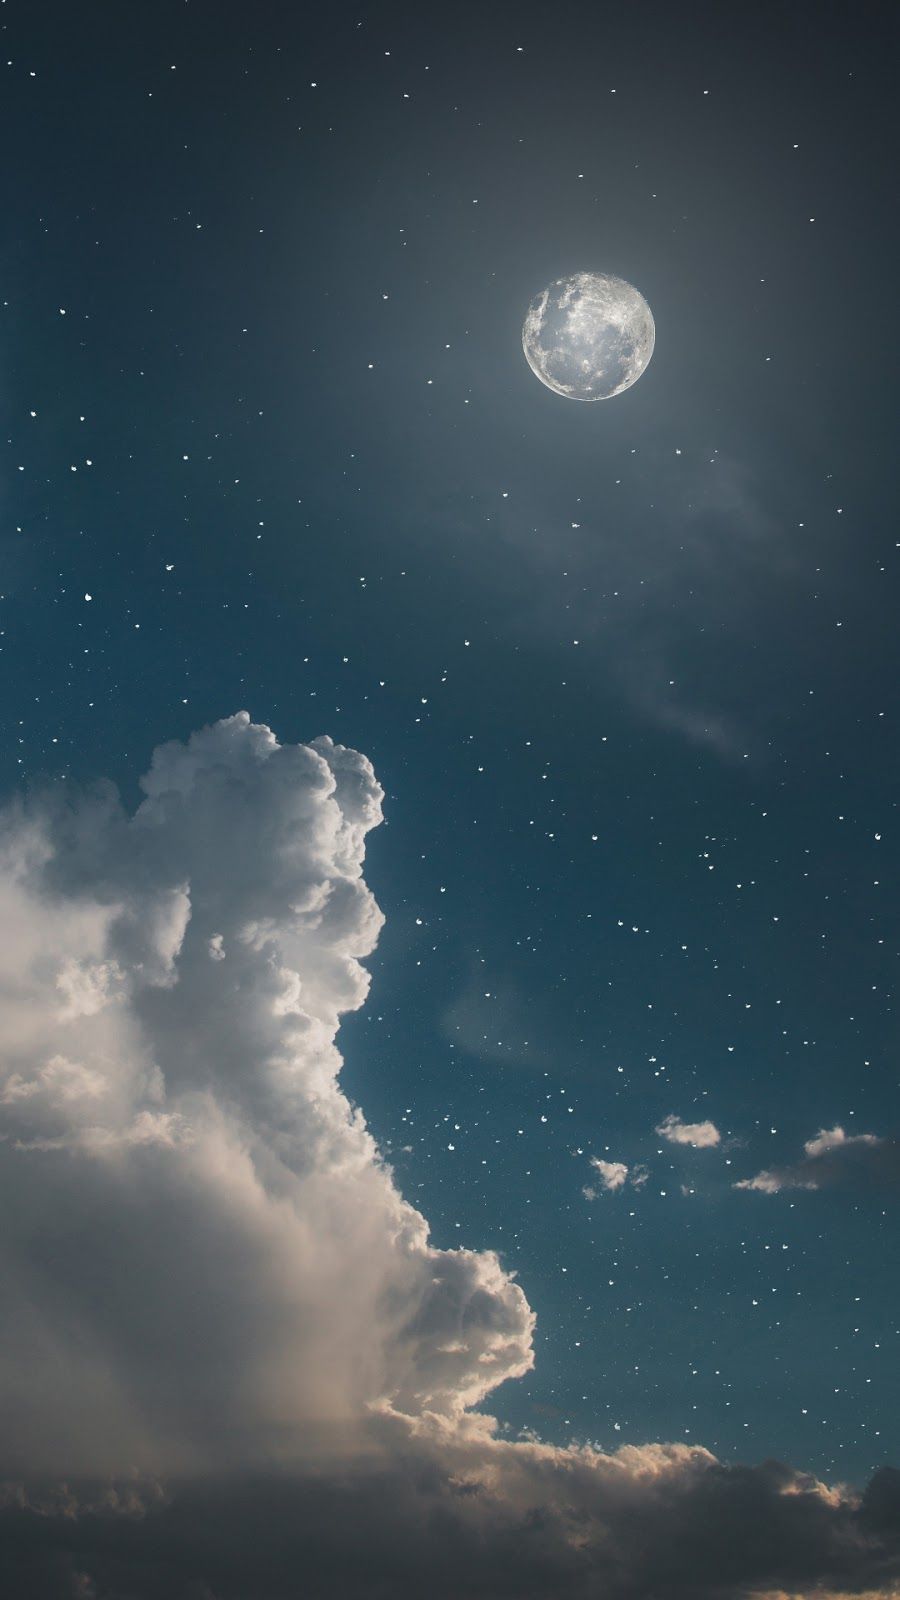 Cloud and Moon Wallpaper Free HD Wallpaper